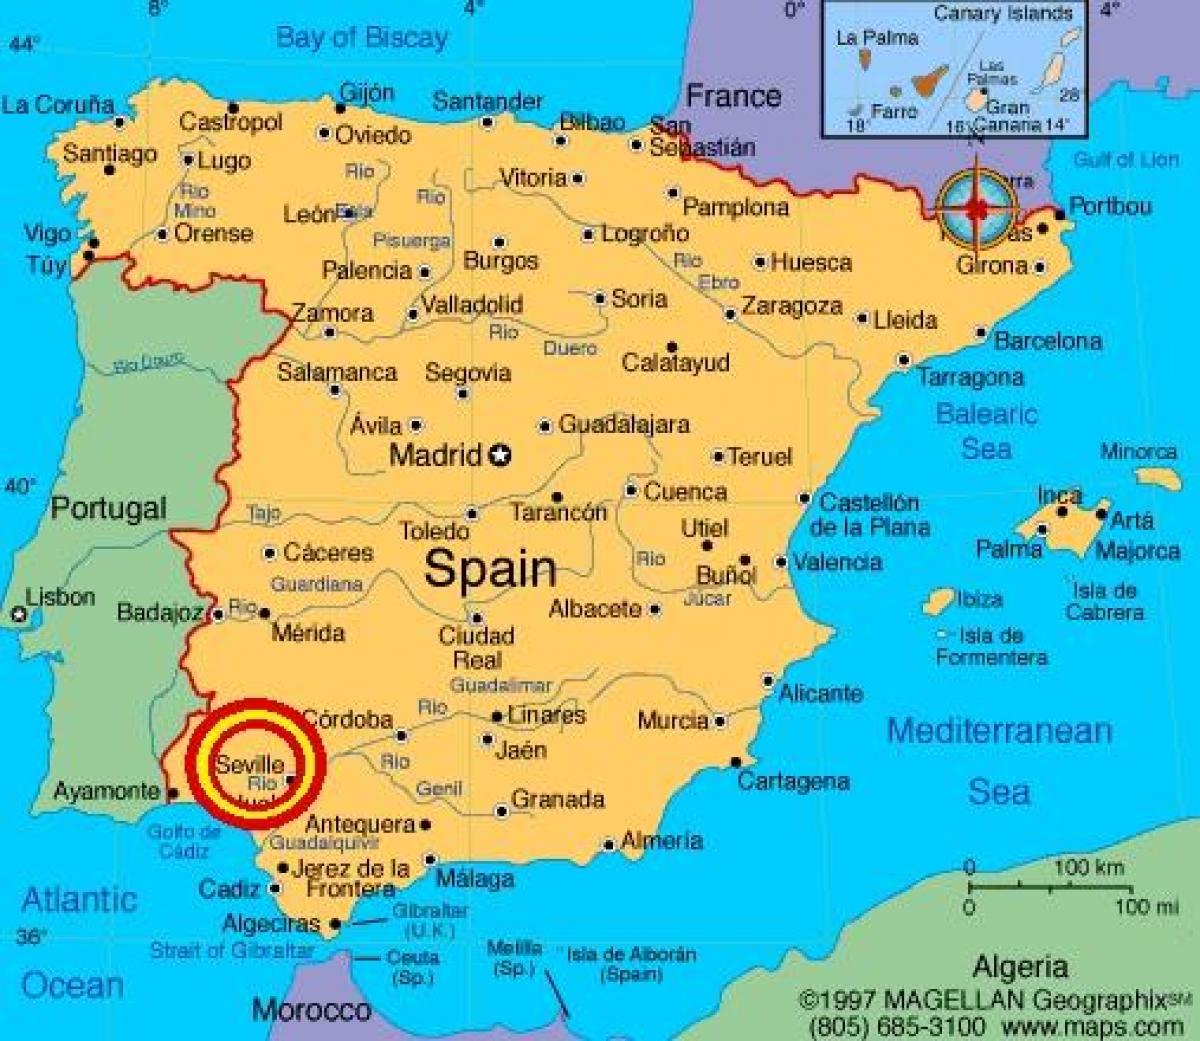 Sevilla espana แผนที่